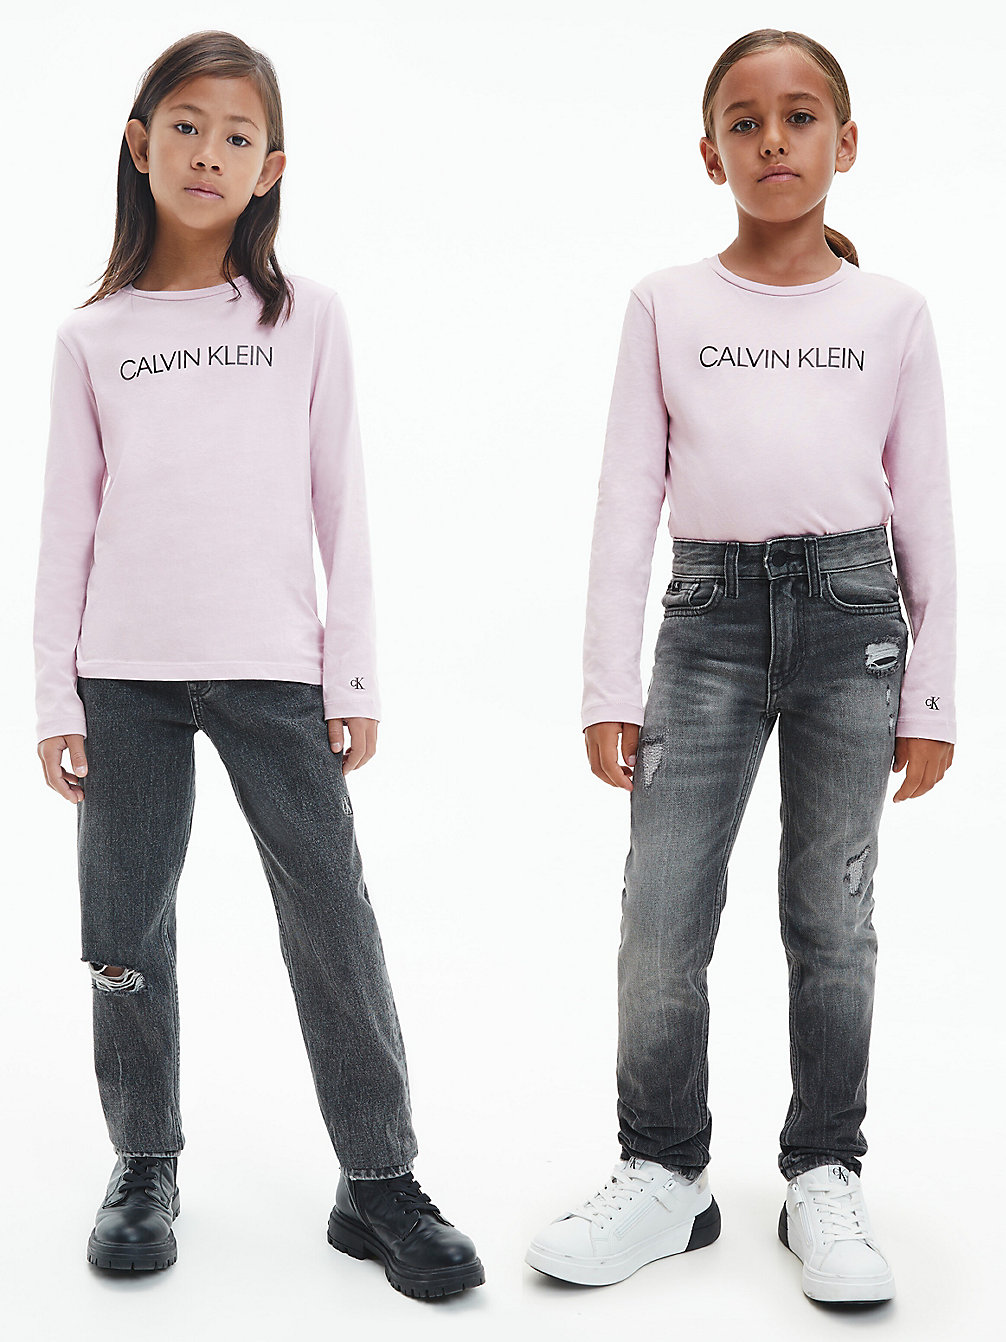 HAWAII ORCHID Unisex Long Sleeve T-Shirt undefined kids unisex Calvin Klein